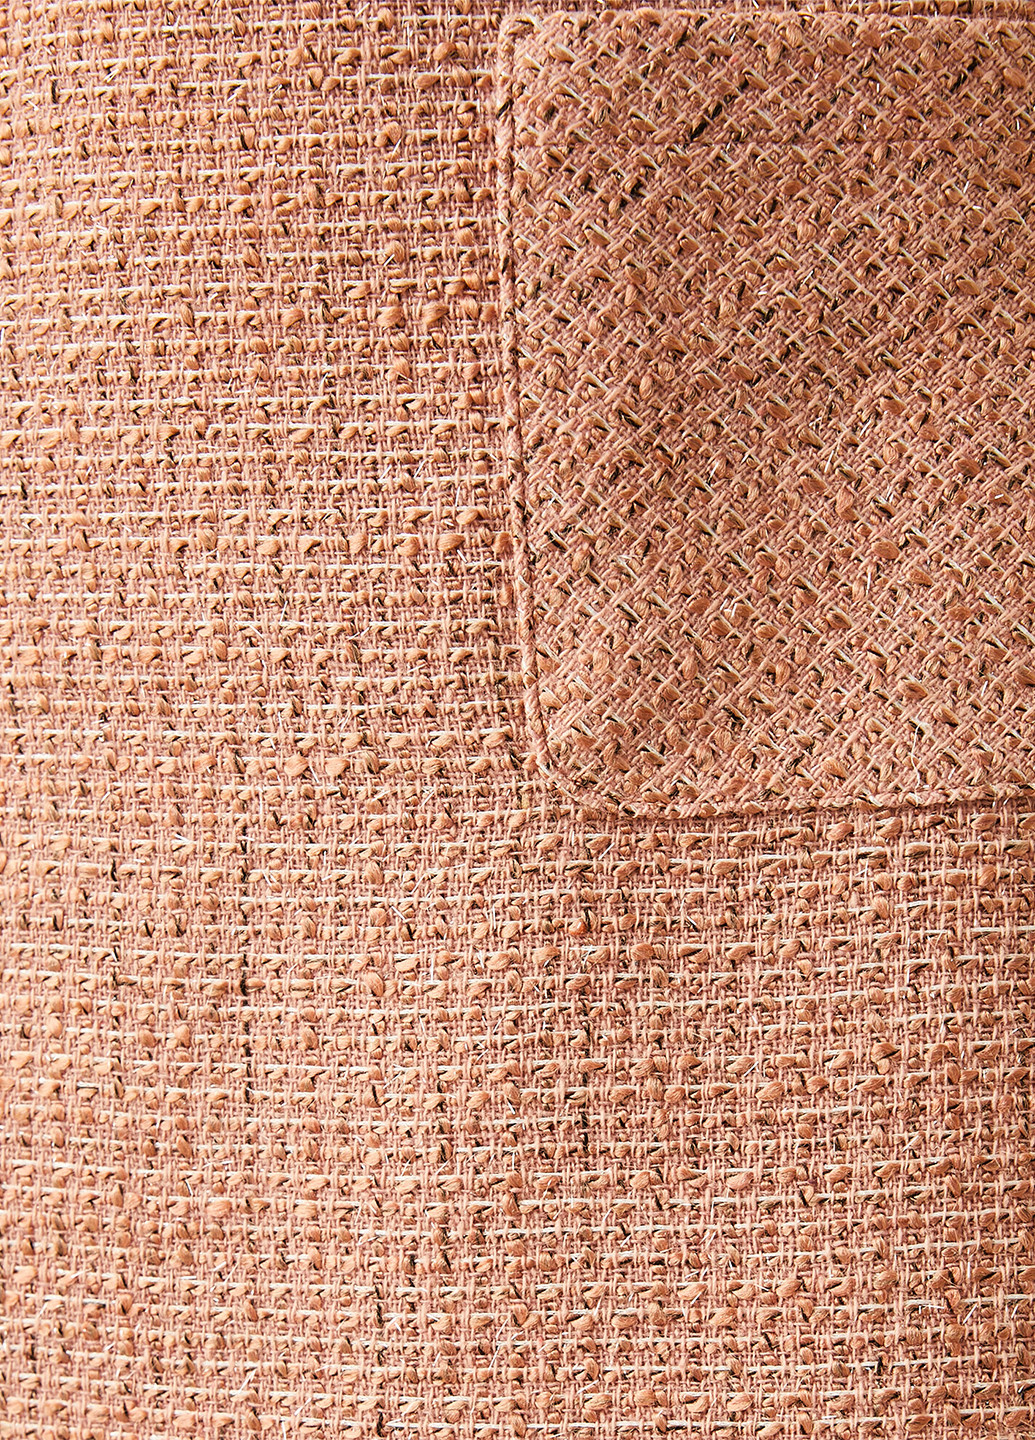 Светло-розовая кэжуал меланж юбка KOTON а-силуэта (трапеция)